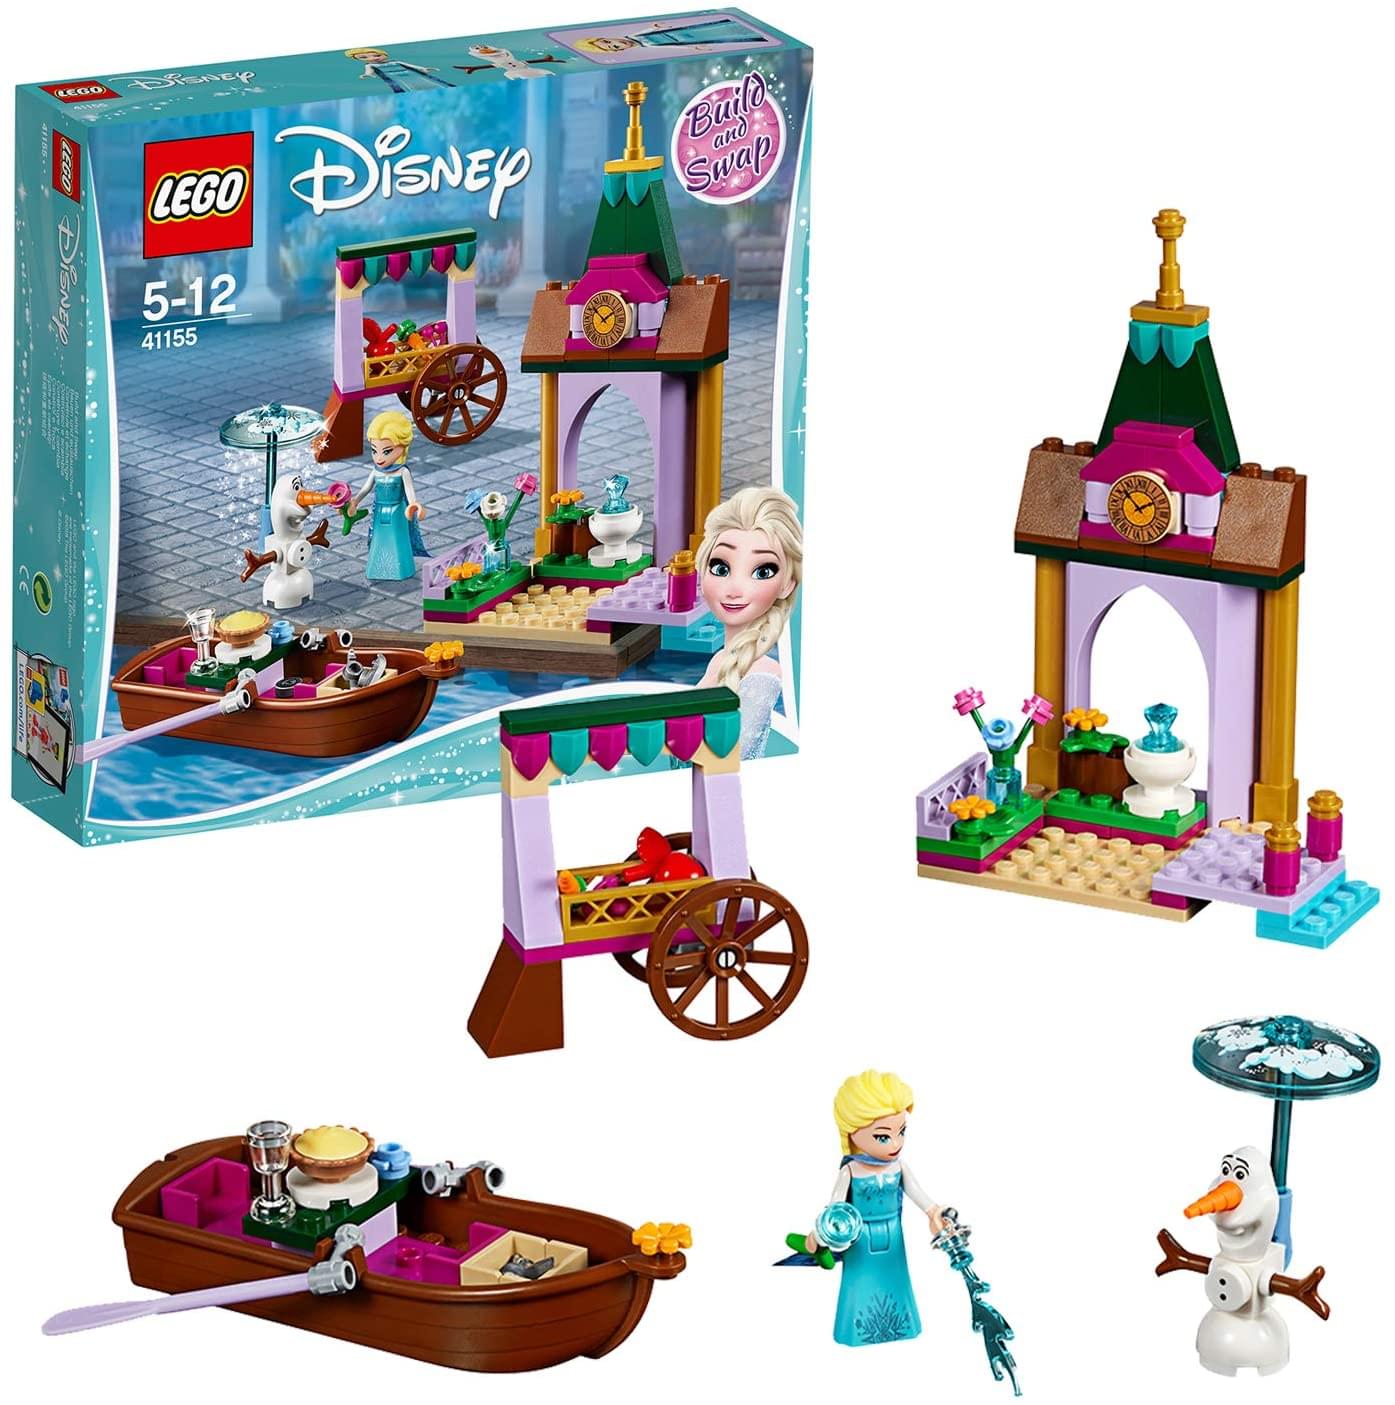 LEGO Disney Frozen 41155 Elsa Market Adventure 125 Piece Building Set